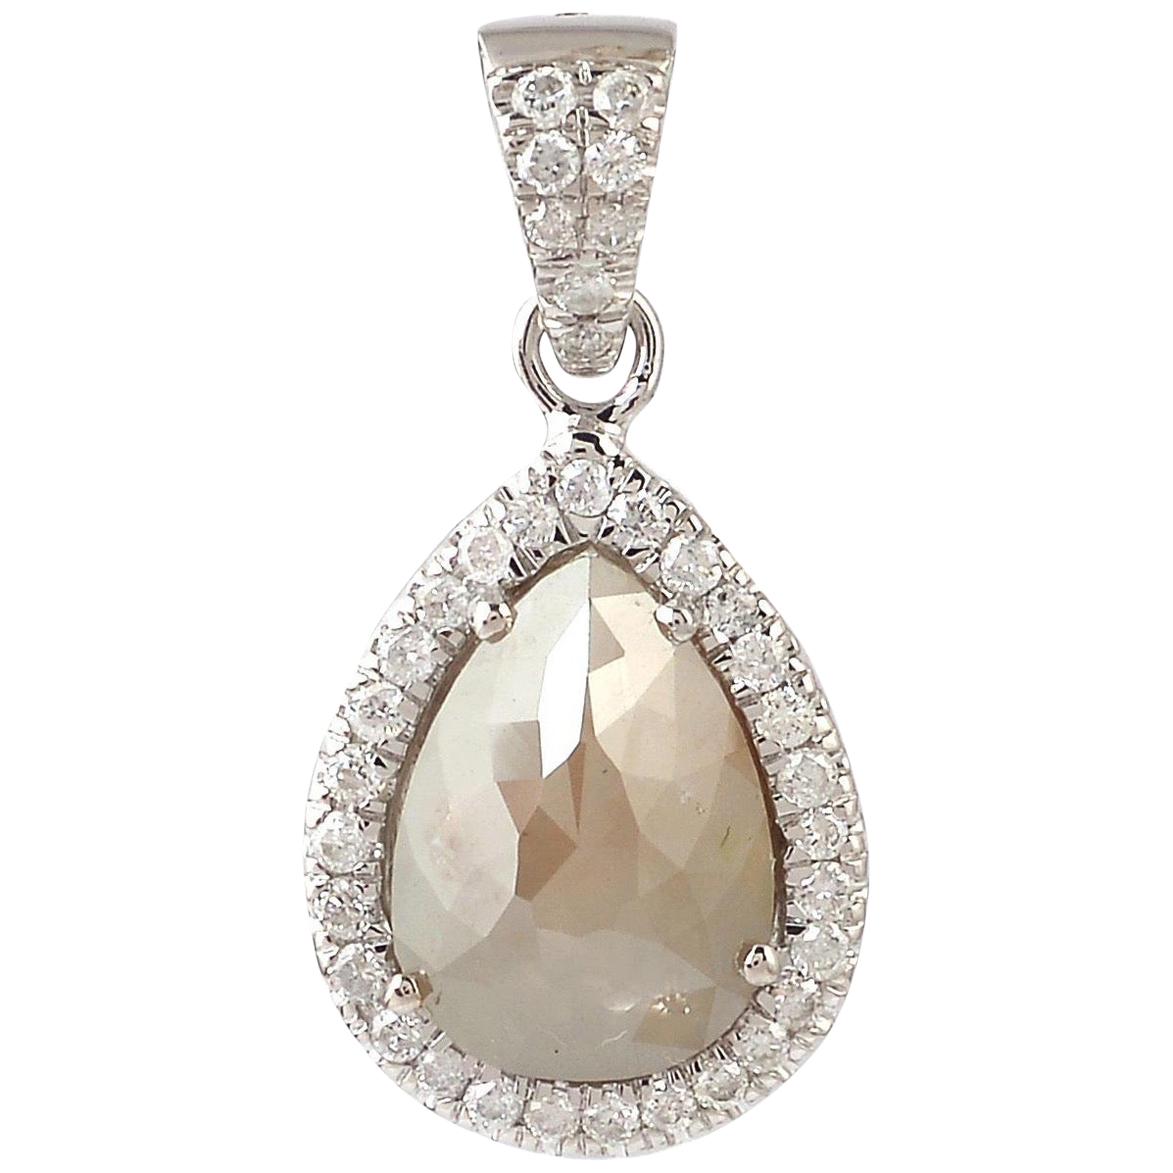 Collier pendentif en or blanc 18 carats avec diamants en forme de tranche fantaisie